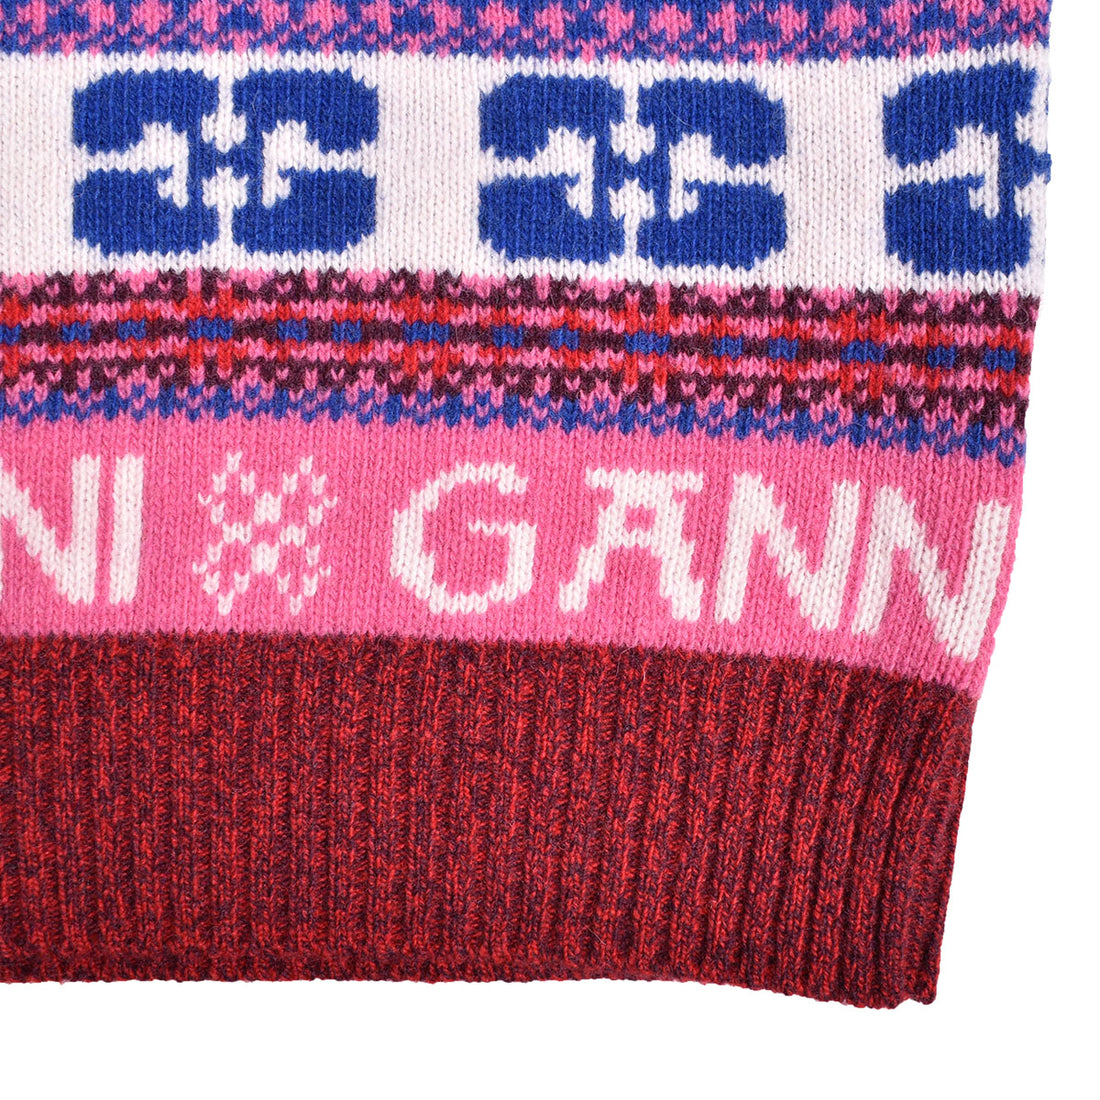 [GANNI]Logo Wool Mix Vest/MULTI(K2121)